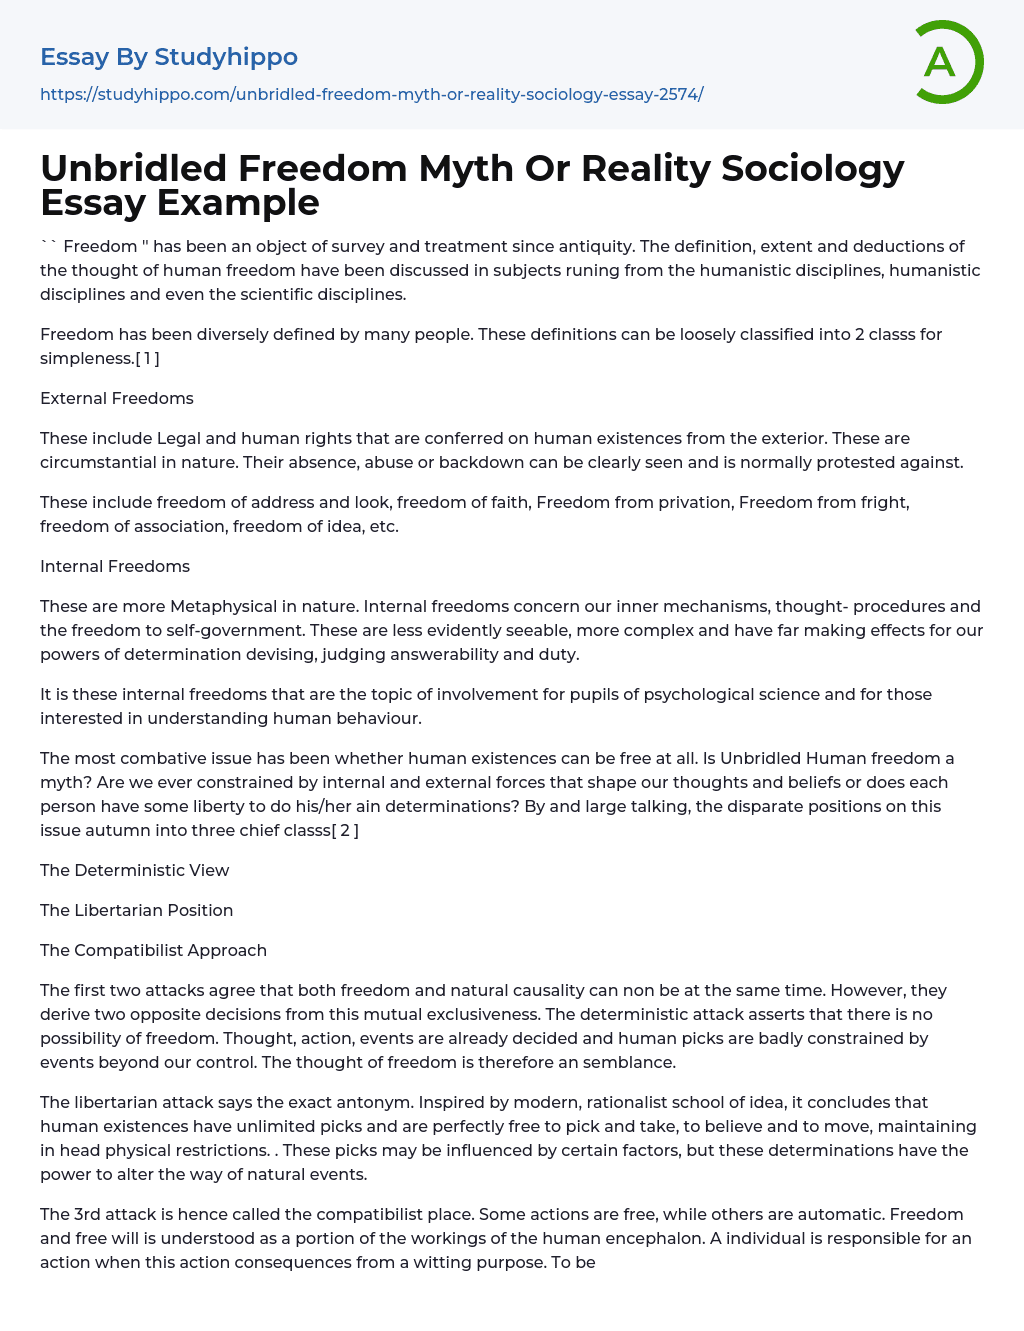 Unbridled Freedom Myth Or Reality Sociology Essay Example